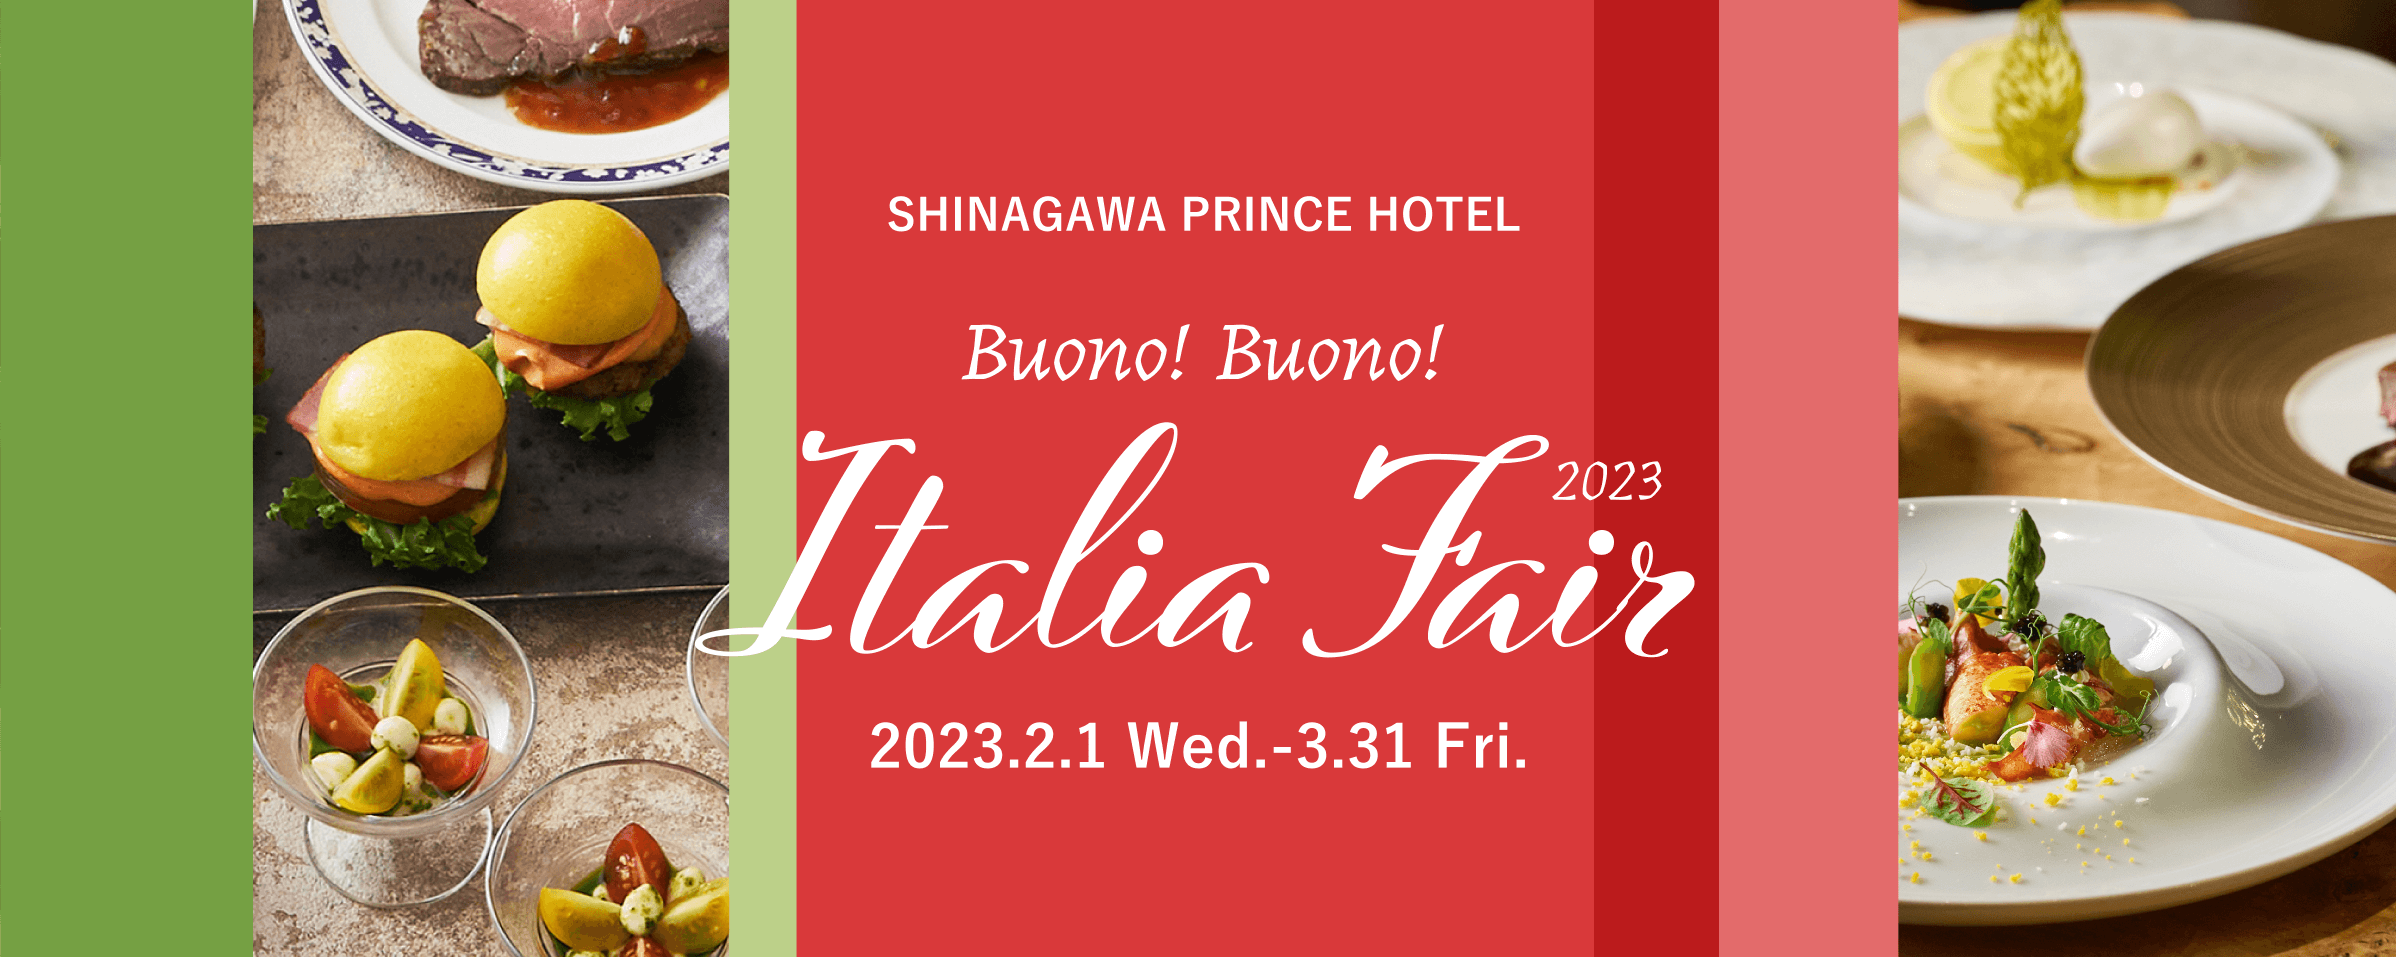 Italia Fair 2023 品川プリンスホテル